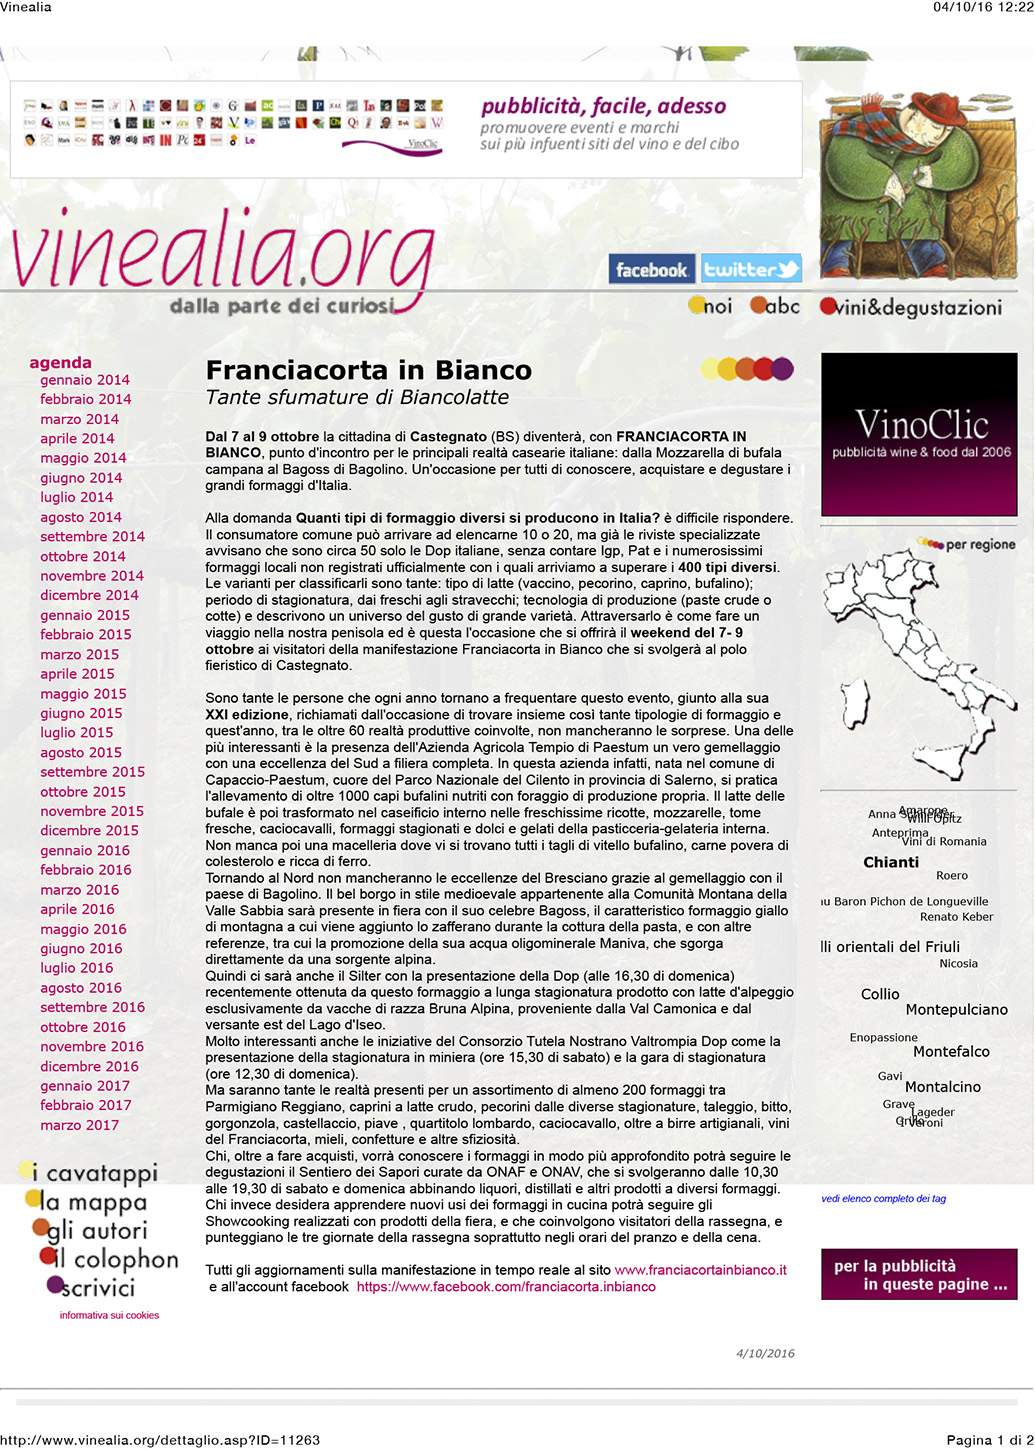 web 20161004 vinealia org 1